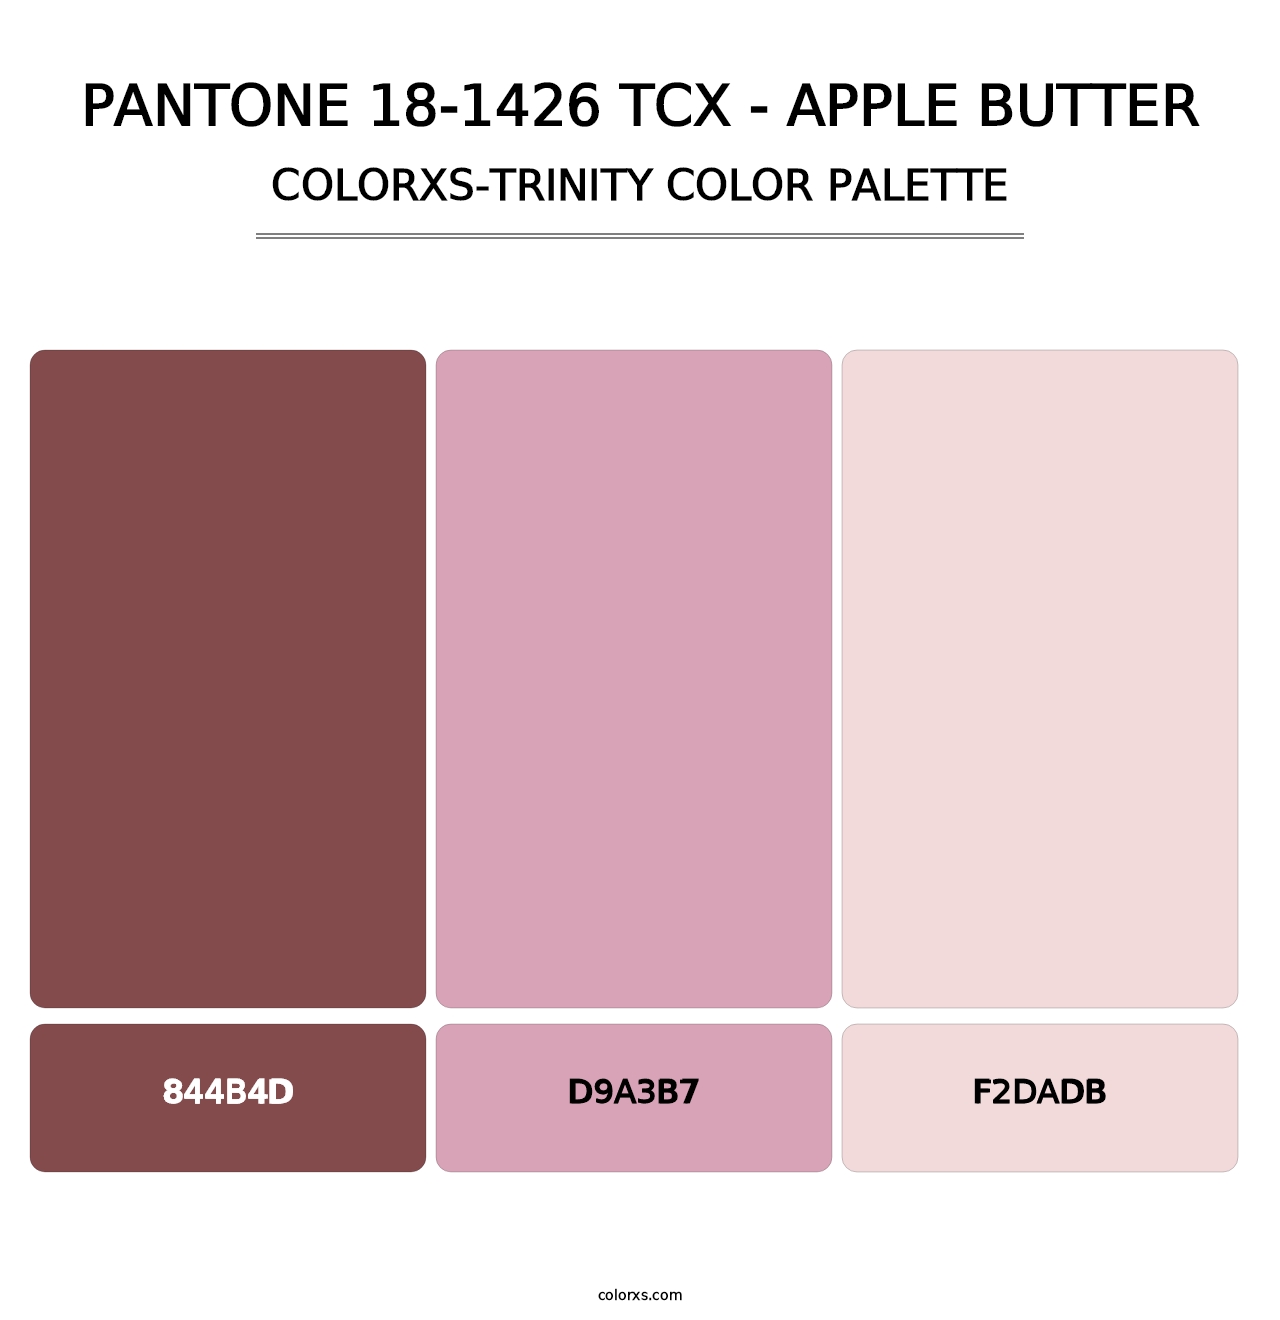 PANTONE 18-1426 TCX - Apple Butter - Colorxs Trinity Palette